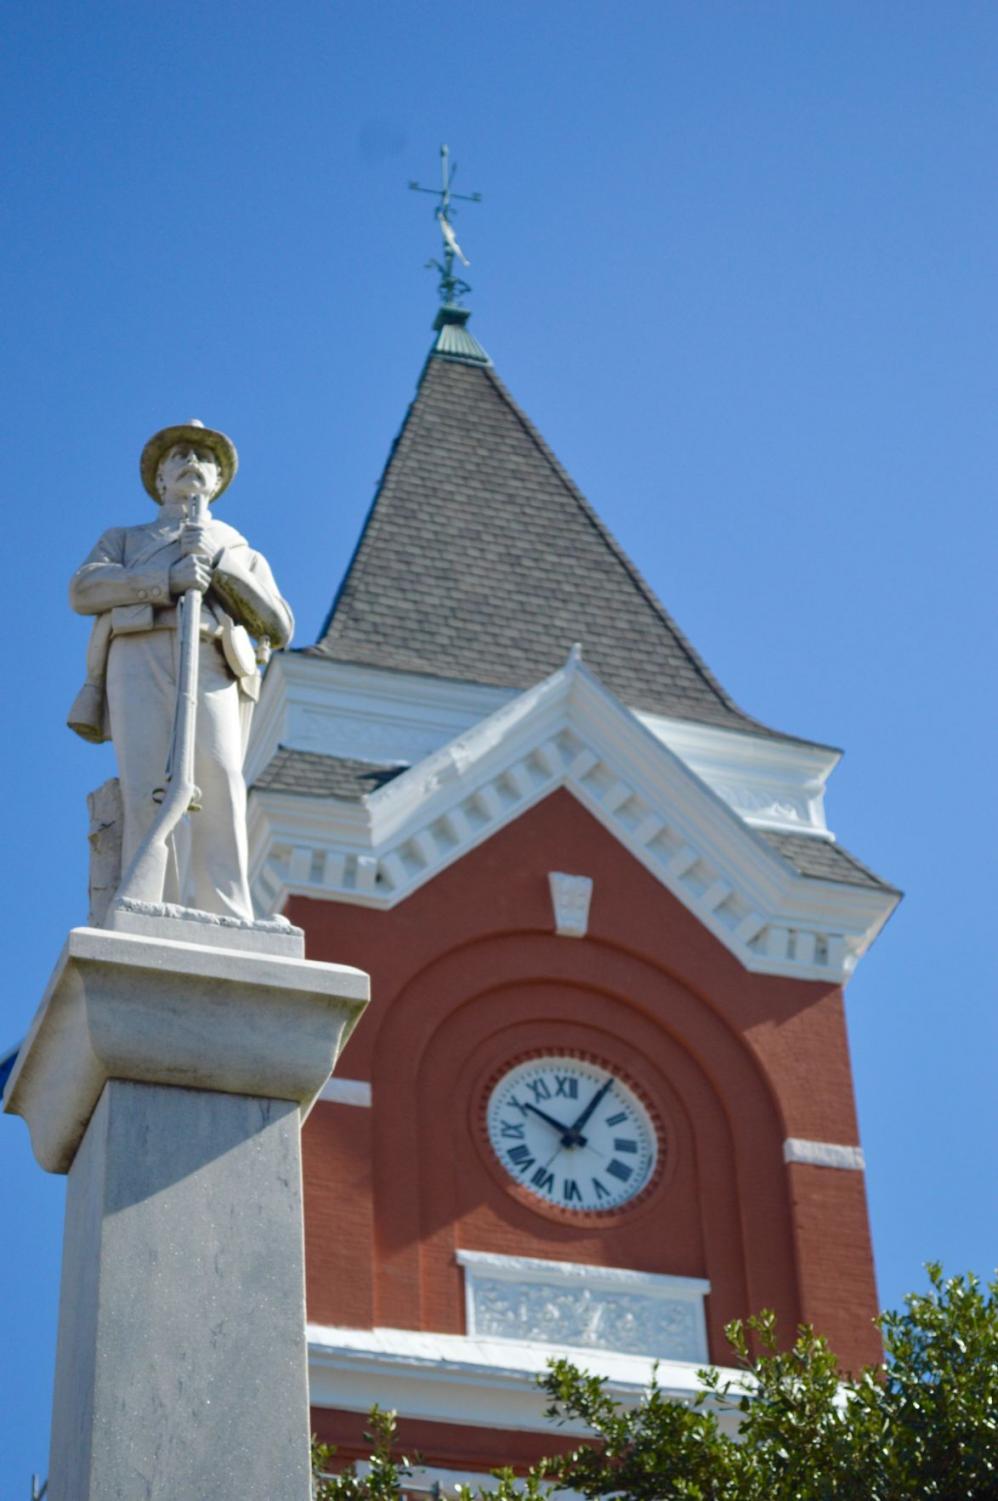 Petition+calls+for+the+removal+of+confederate+statue+in+Statesboro